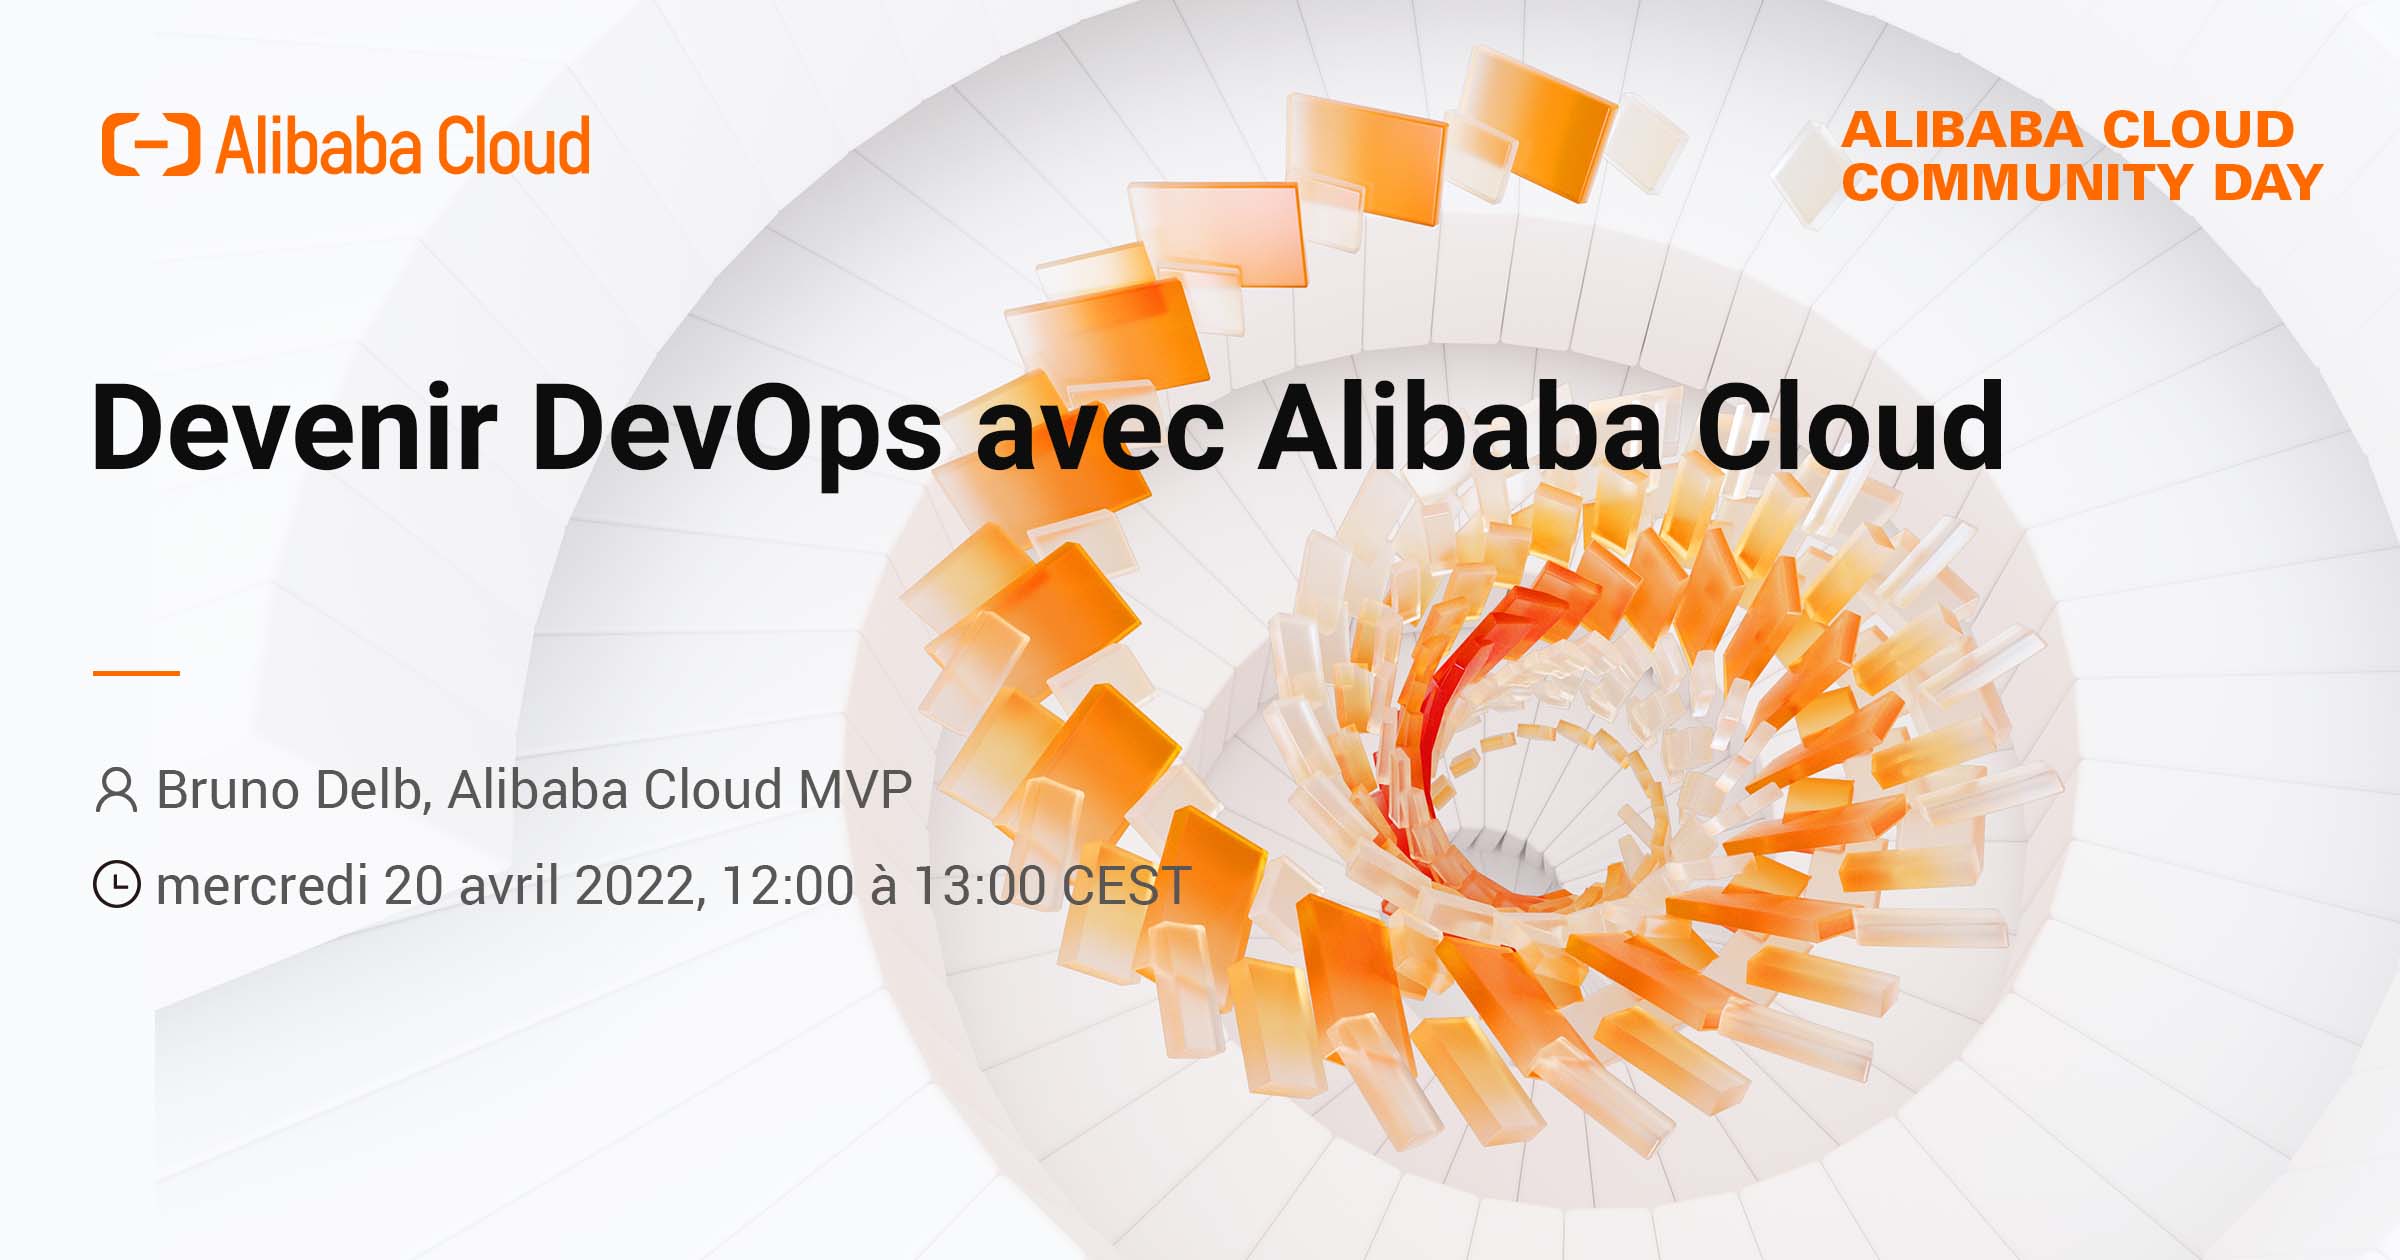 Alibaba Cloud Community Day: Devenir DevOps avec Alibaba Cloud